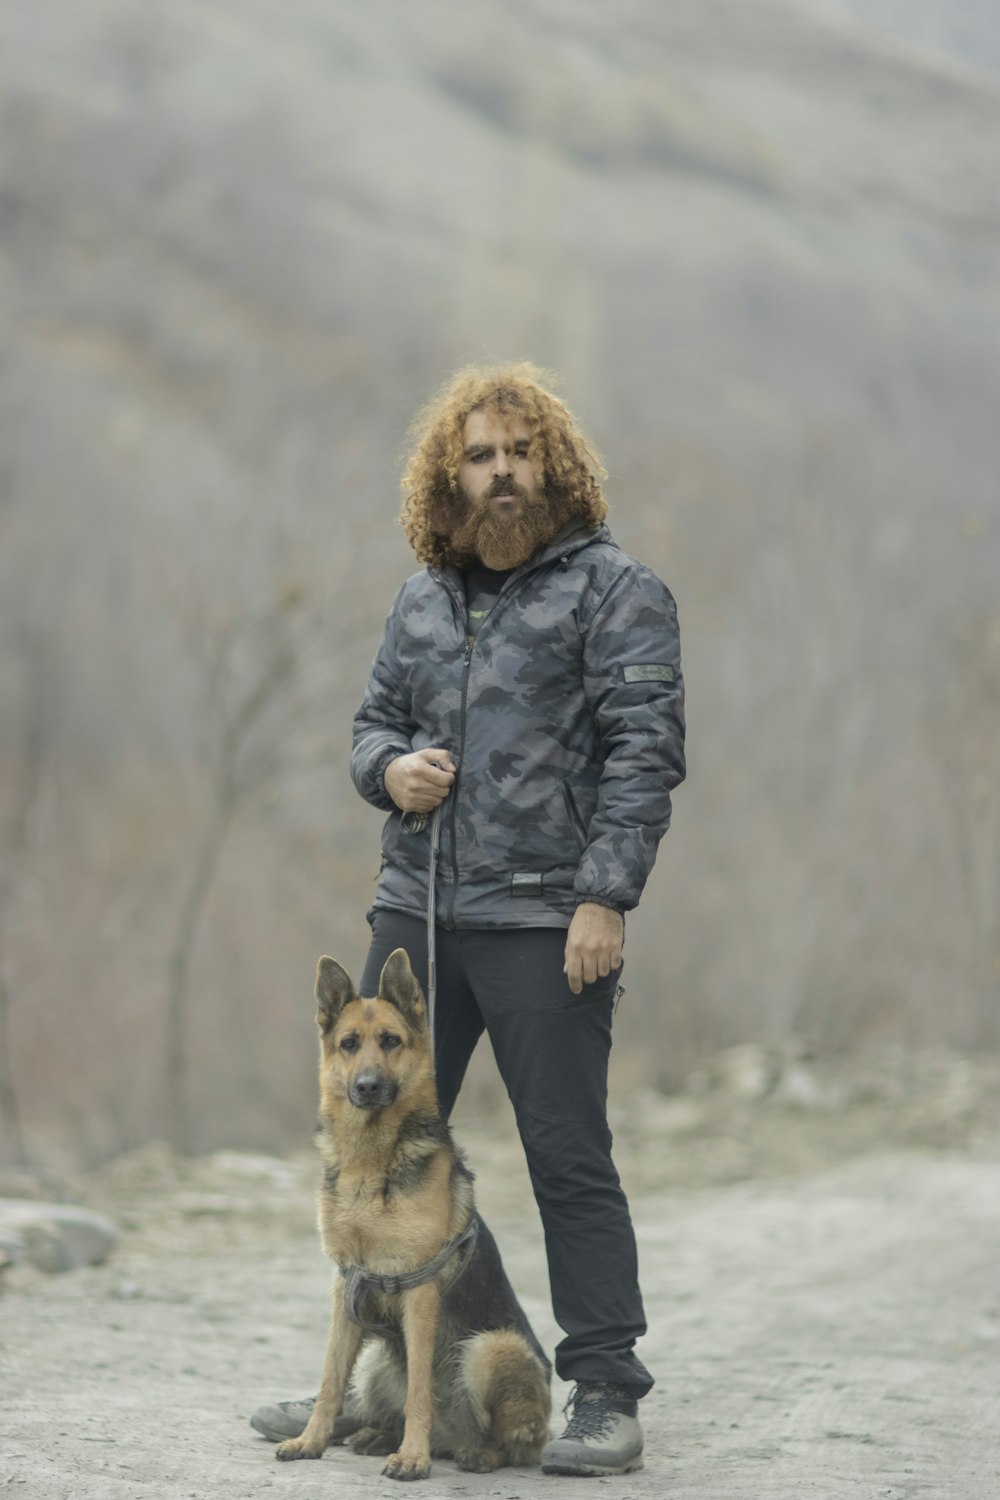 a man with a beard standing next to a dog